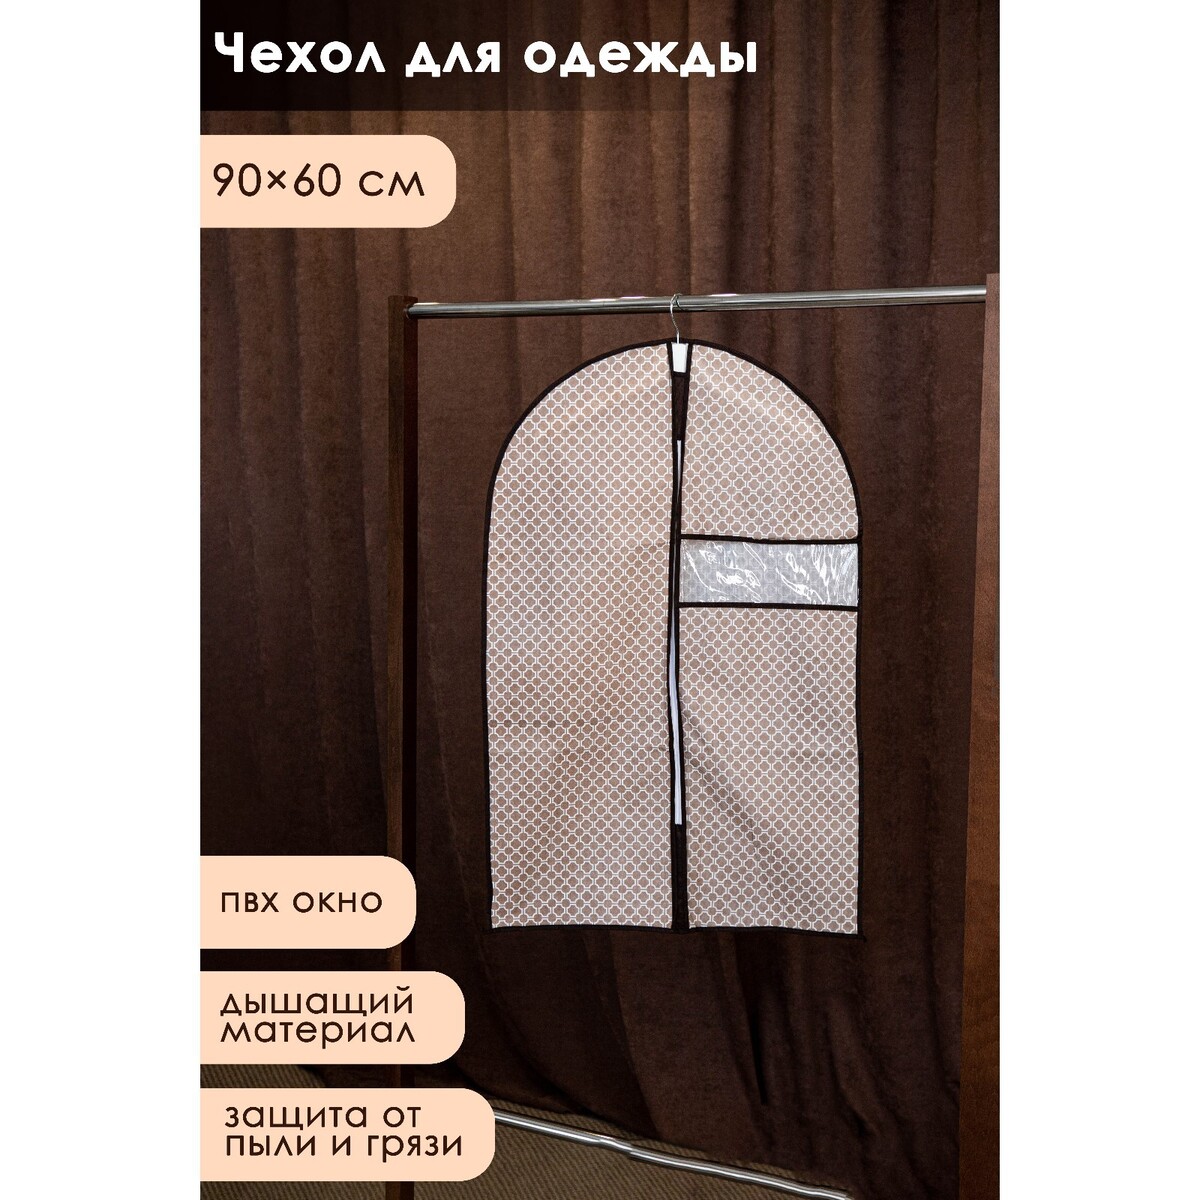 Чехол для одежды с пвх окном доляна чехол для одежды ladо́m 60×90 см peva прозрачный